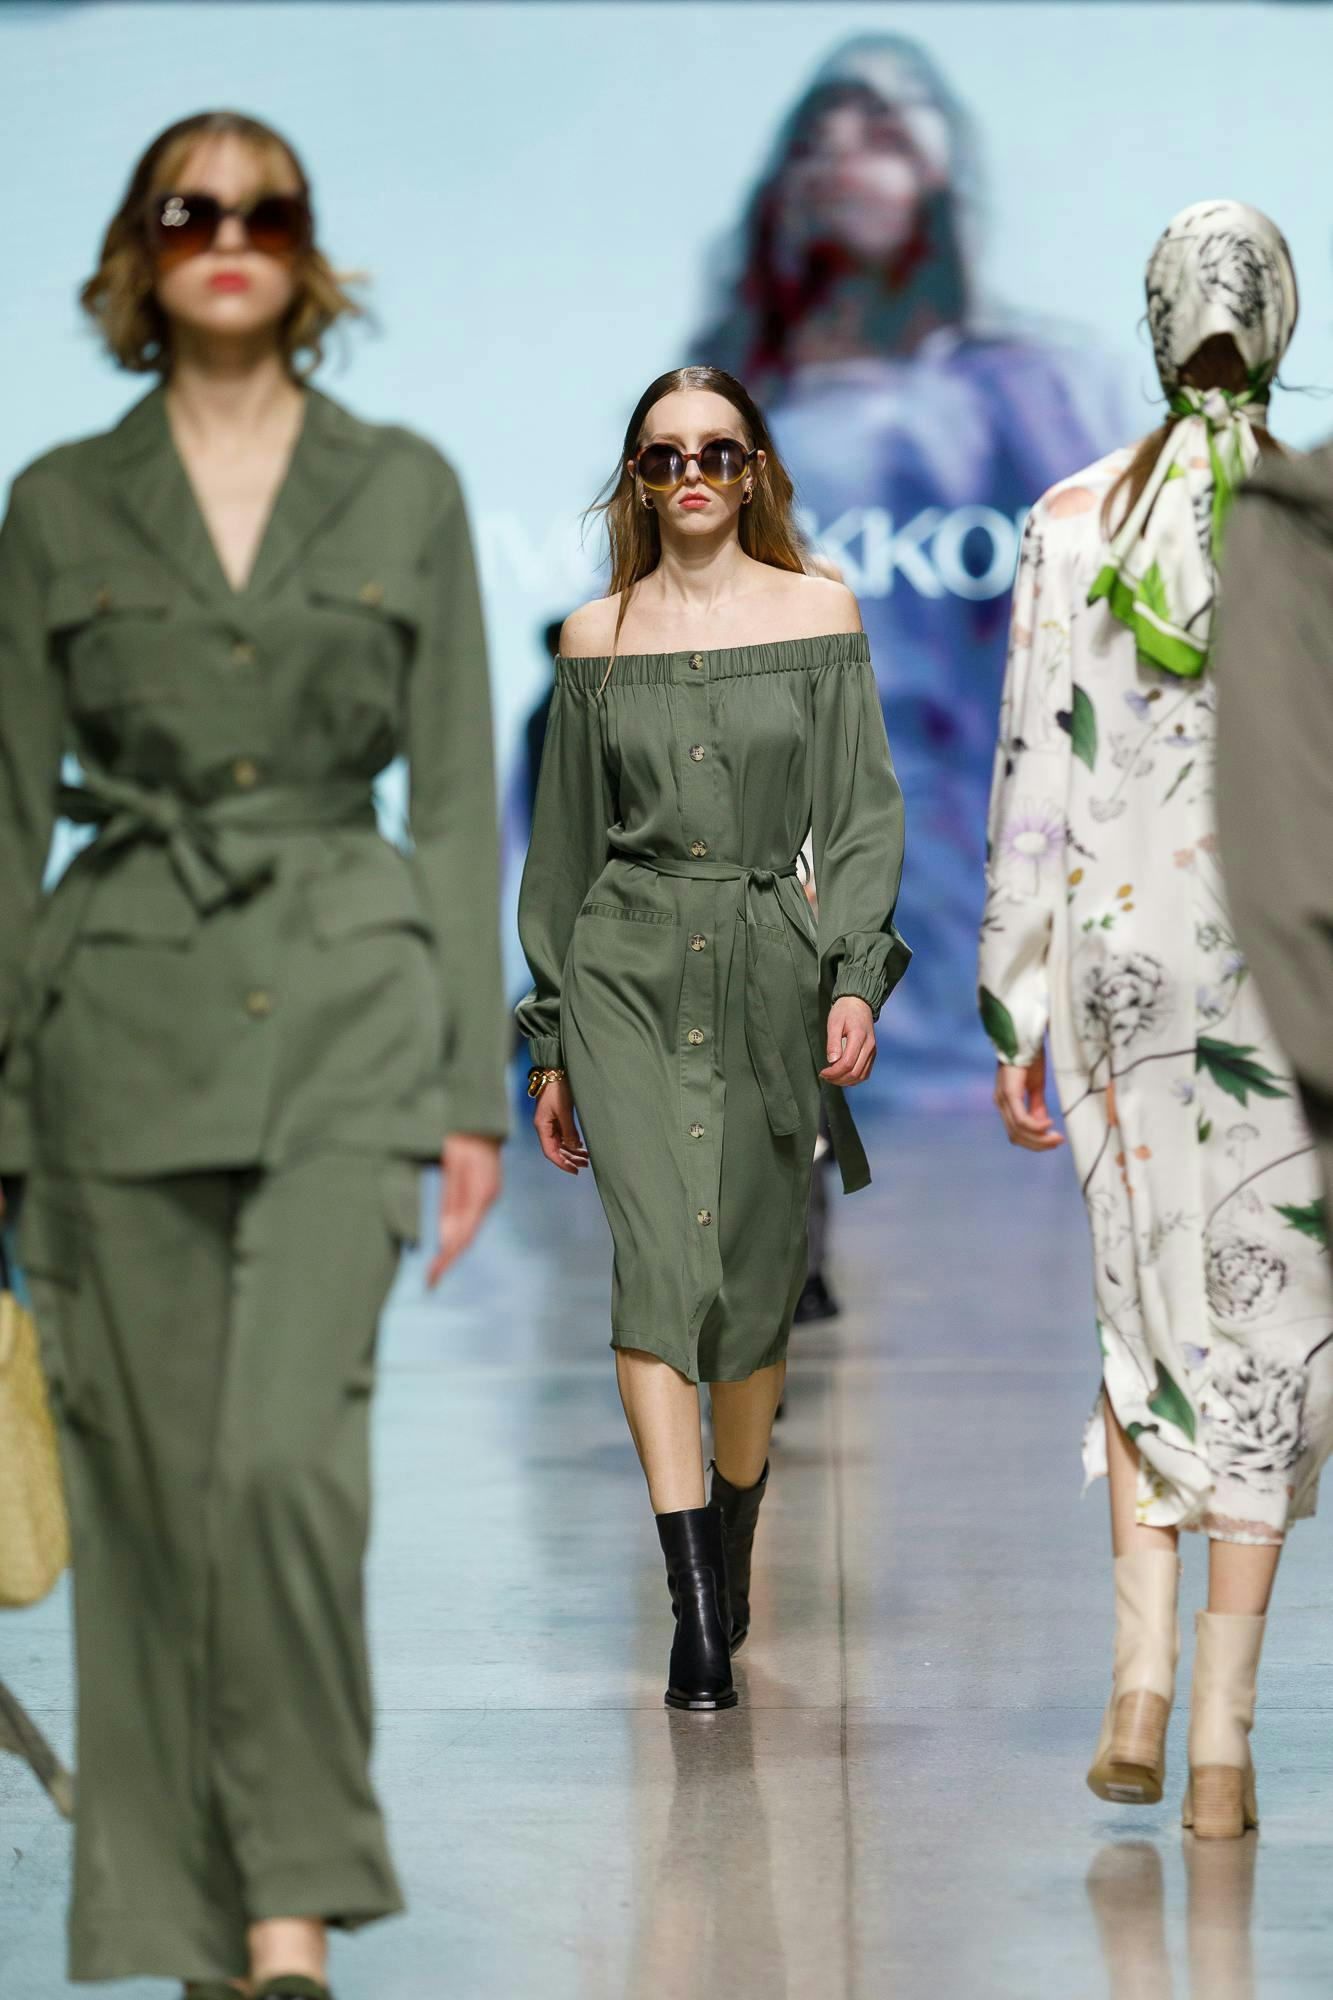 fashion clothing coat long sleeve adult female person woman shoe glasses